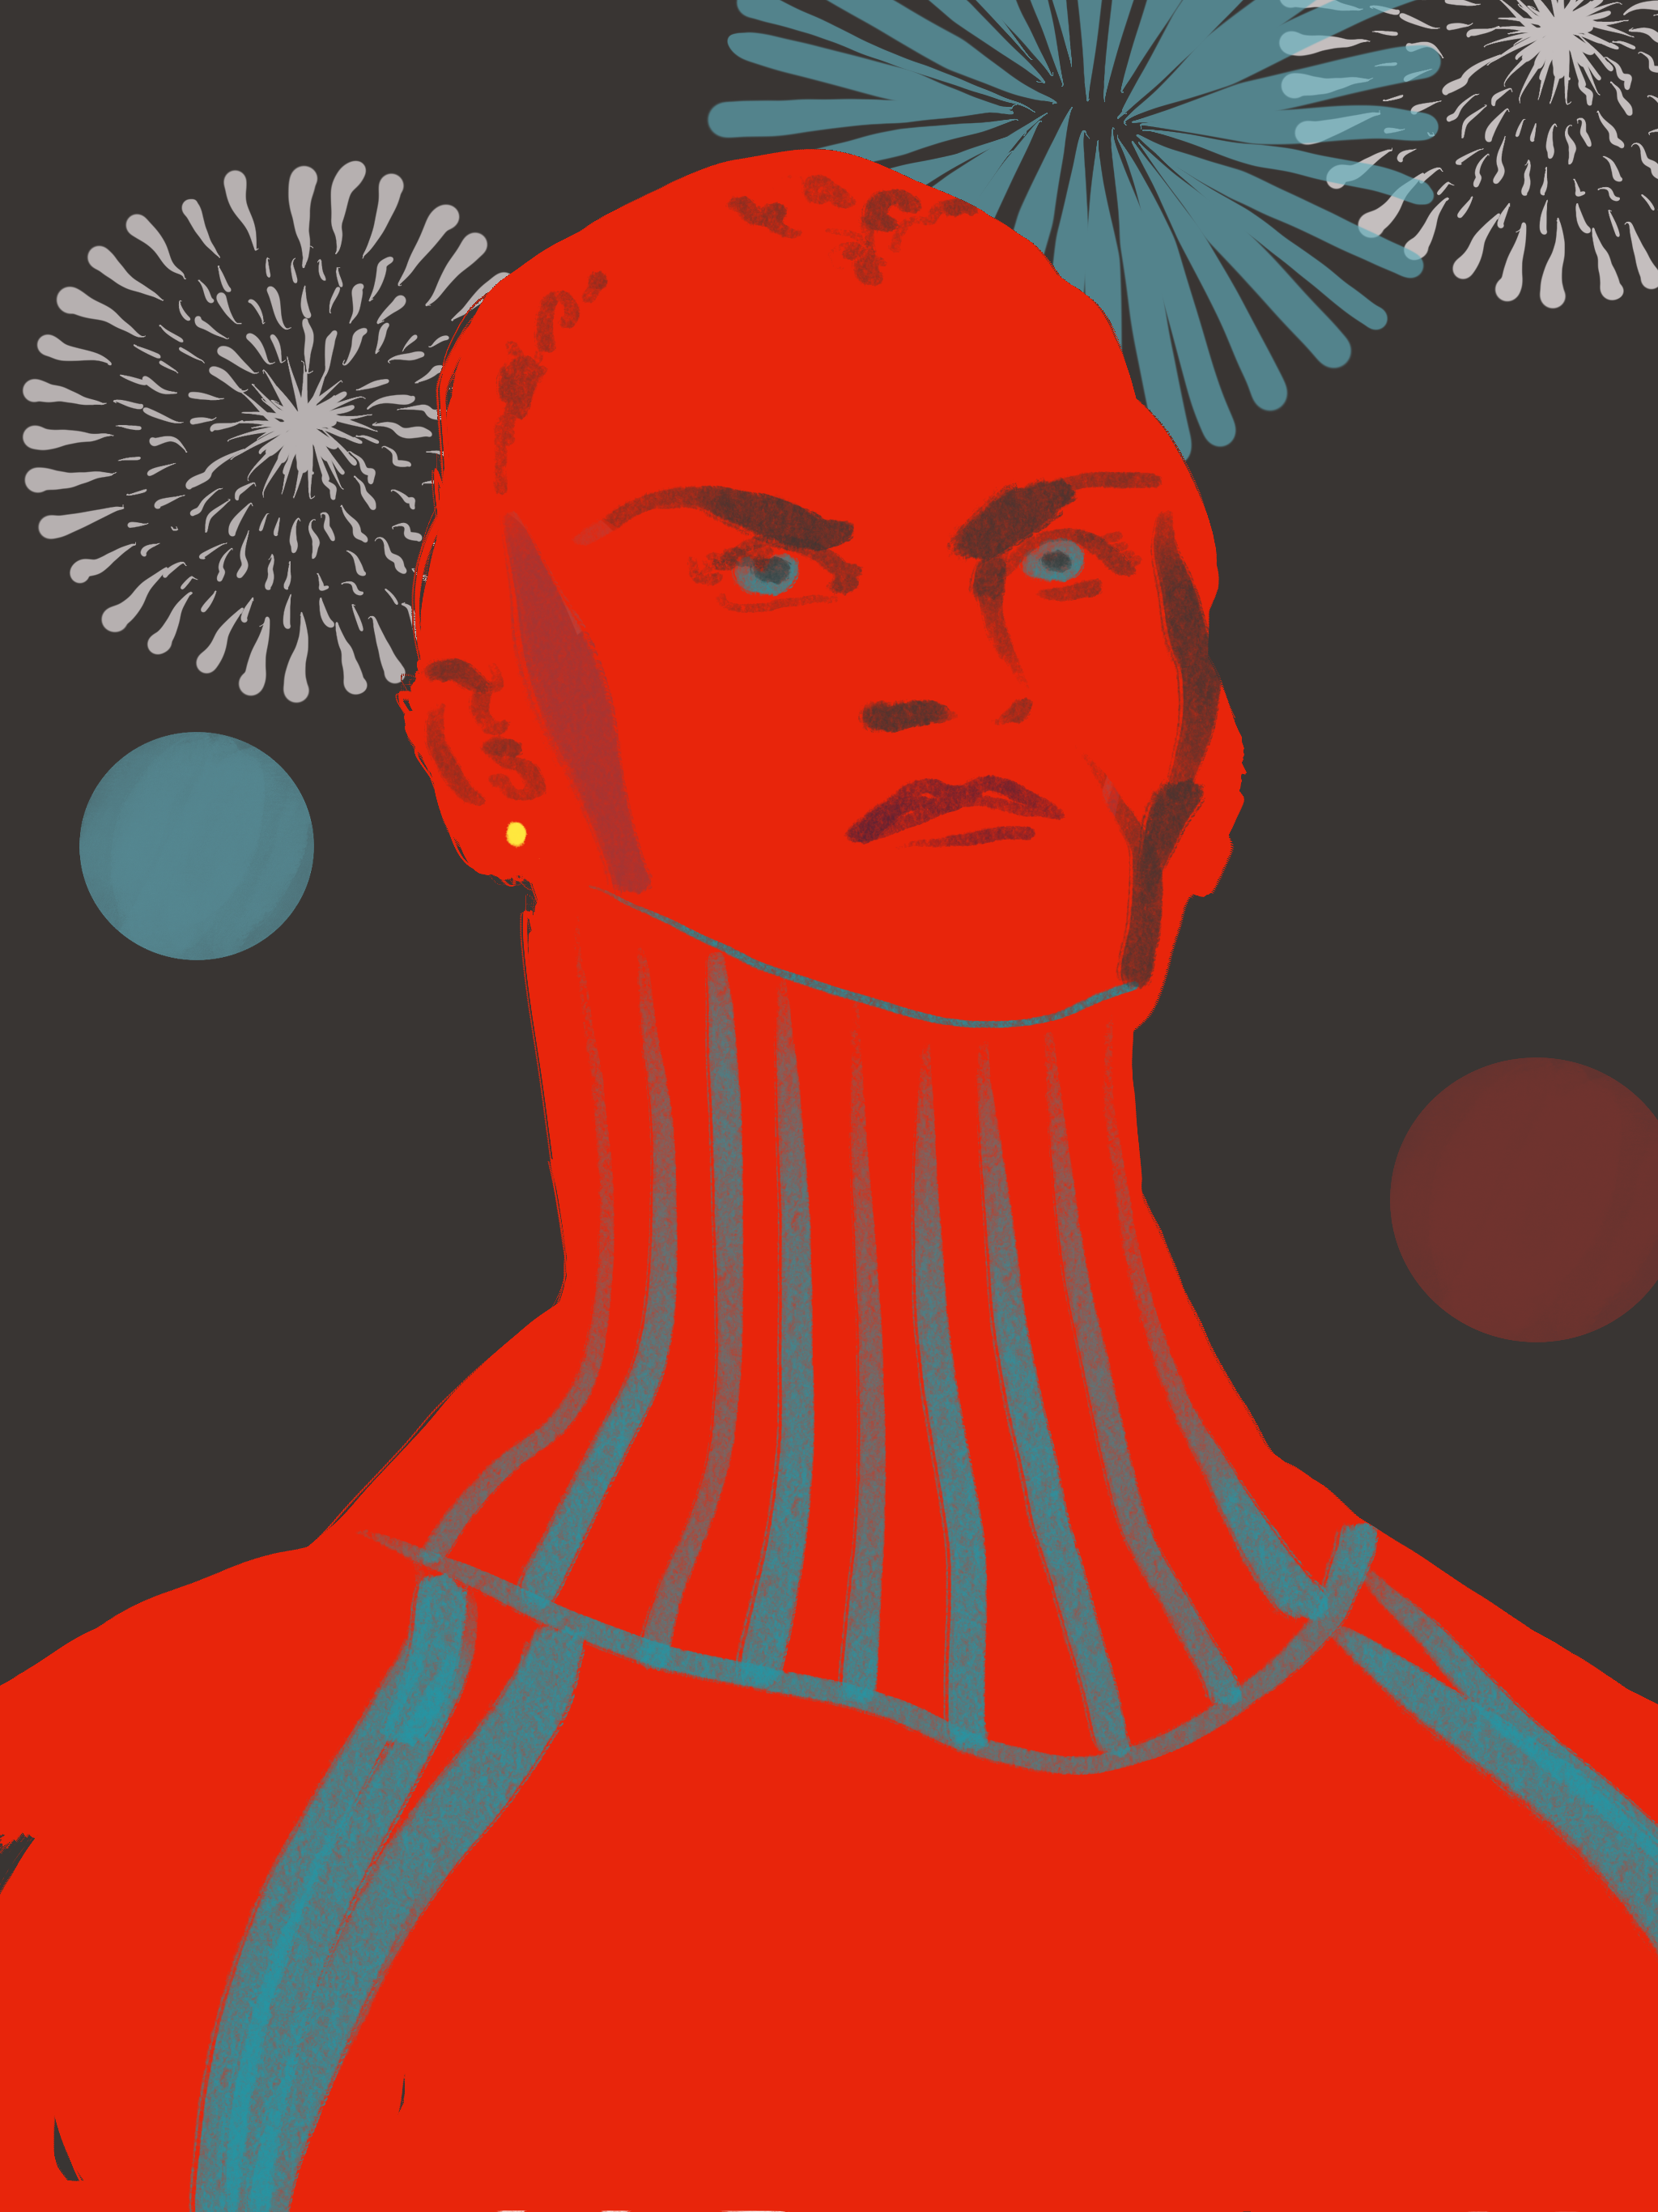 Man 2022 New Year Eve, fashion illustration by Silvana Mariani